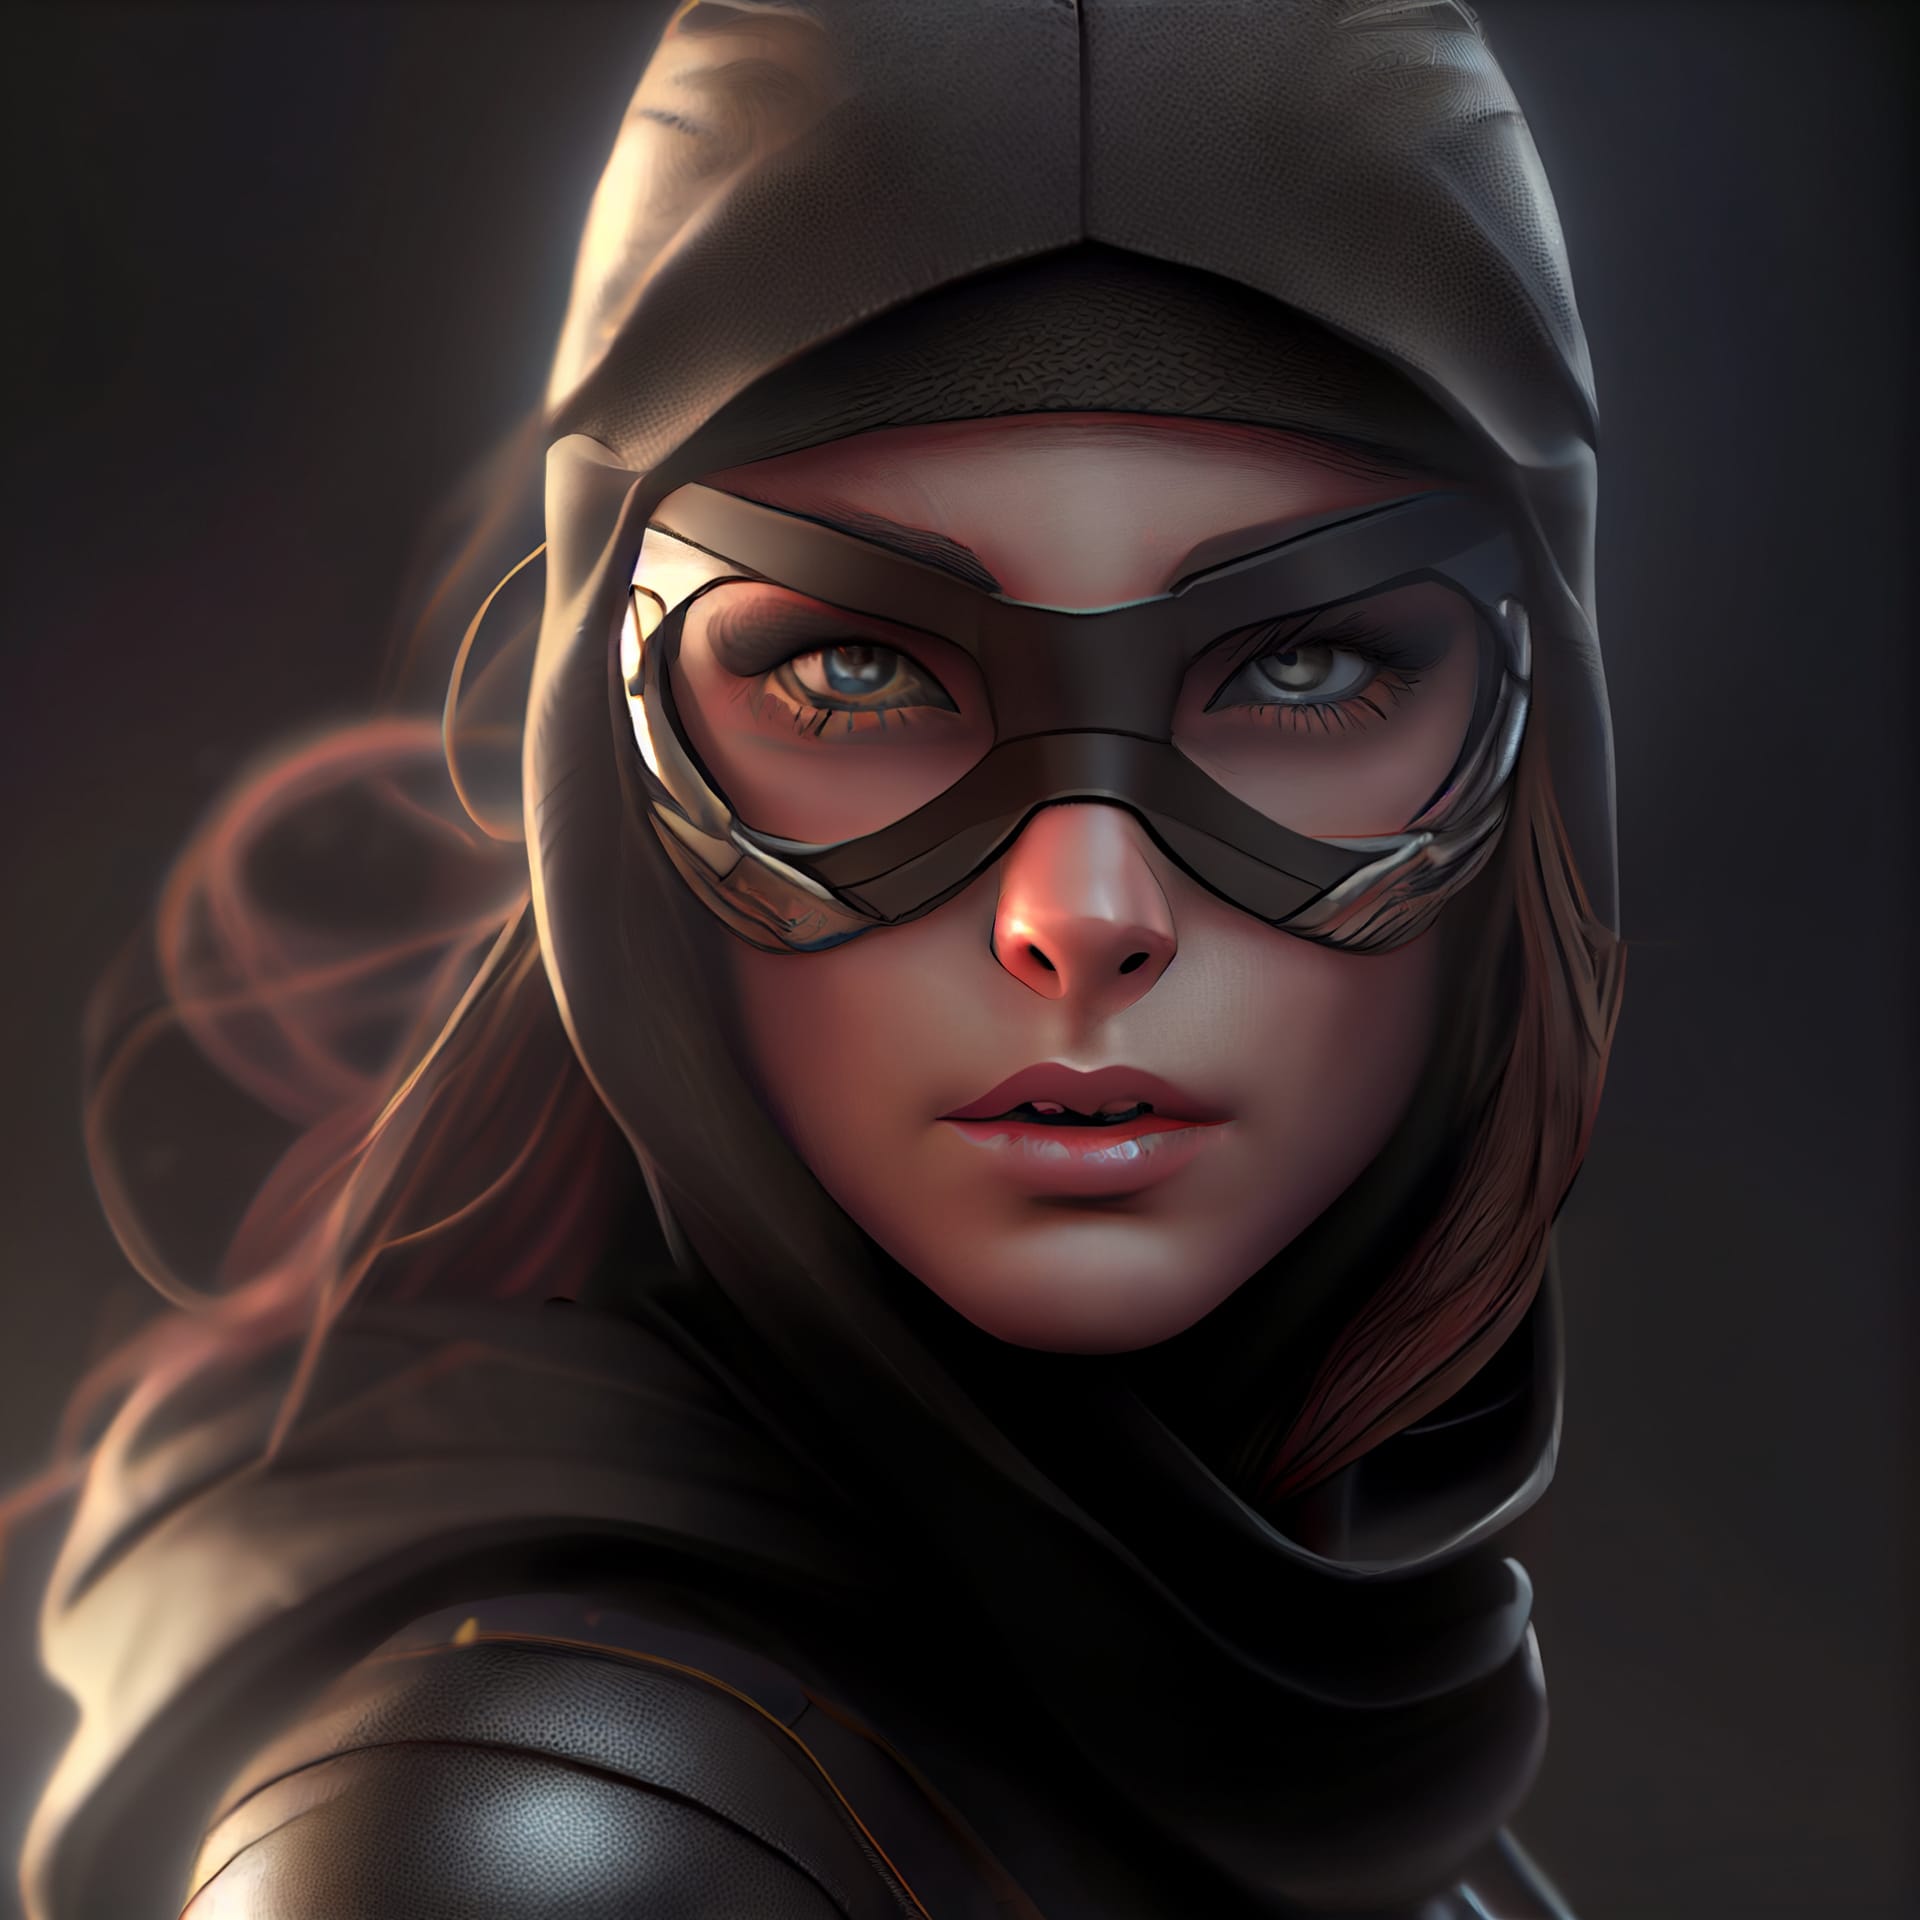 Superheroine woman portrait with superpowers 3d render illustration image